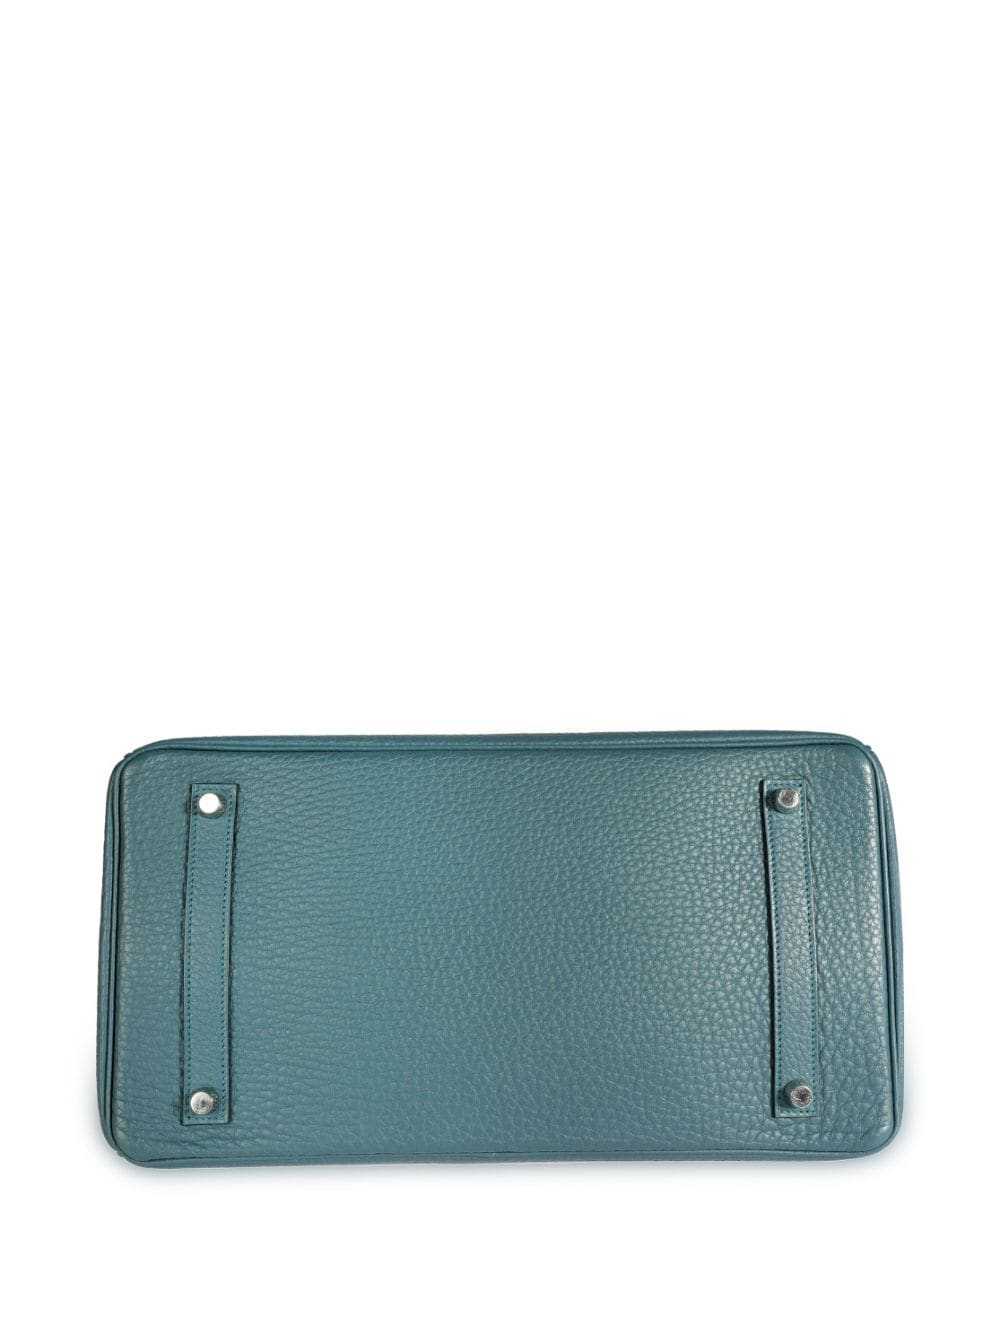 Hermès Pre-Owned 2013 Birkin 35 handbag - Blue - image 4